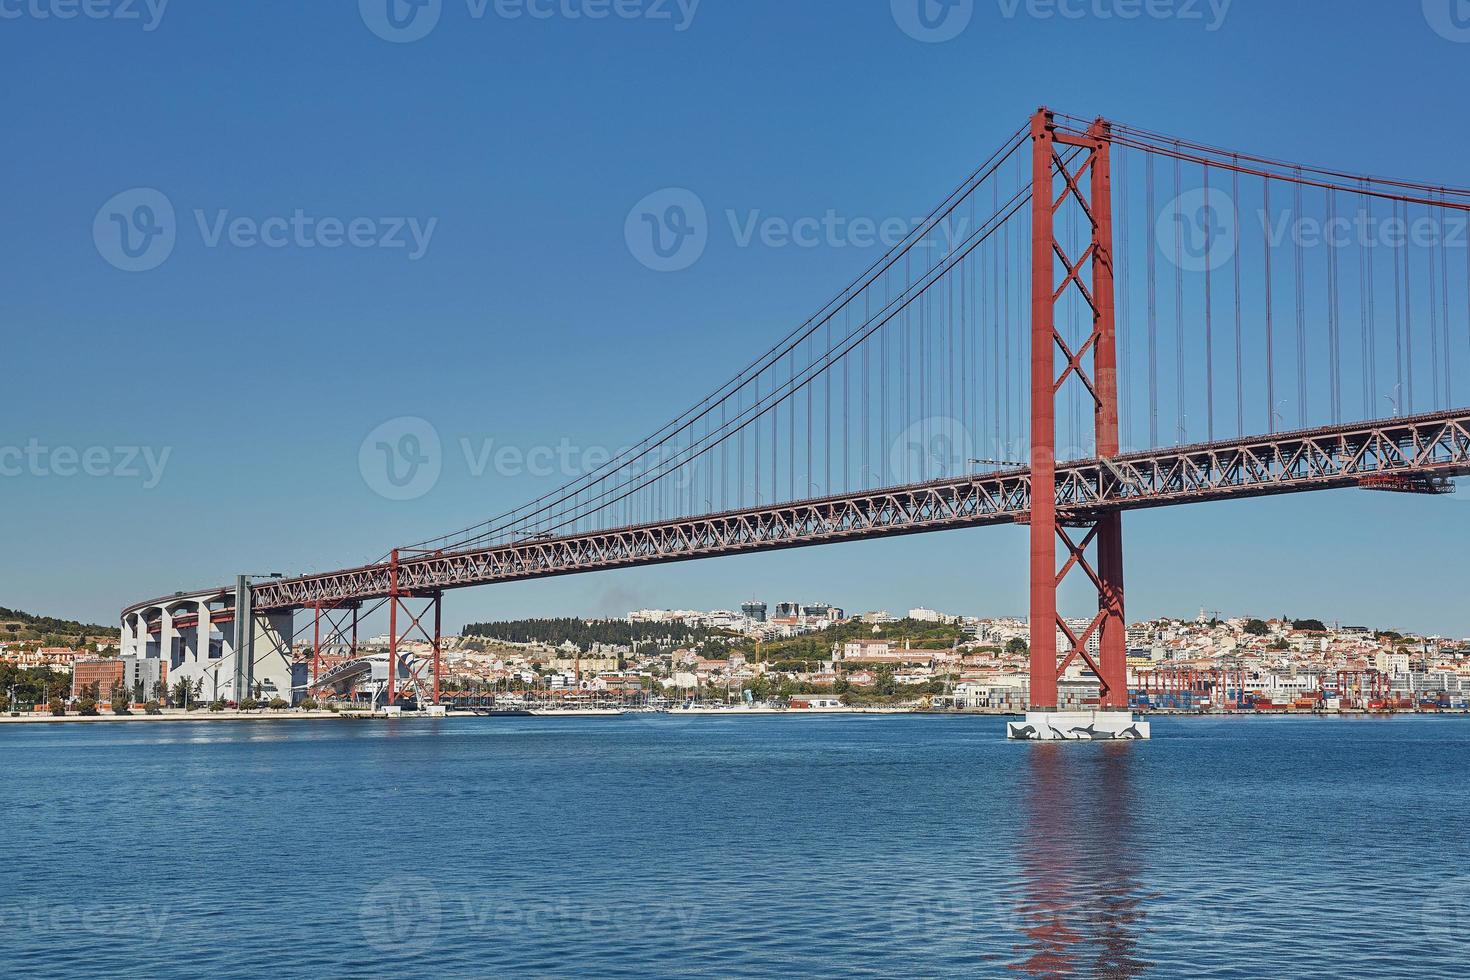 The 25 April bridge in Lisbon, Portugal photo